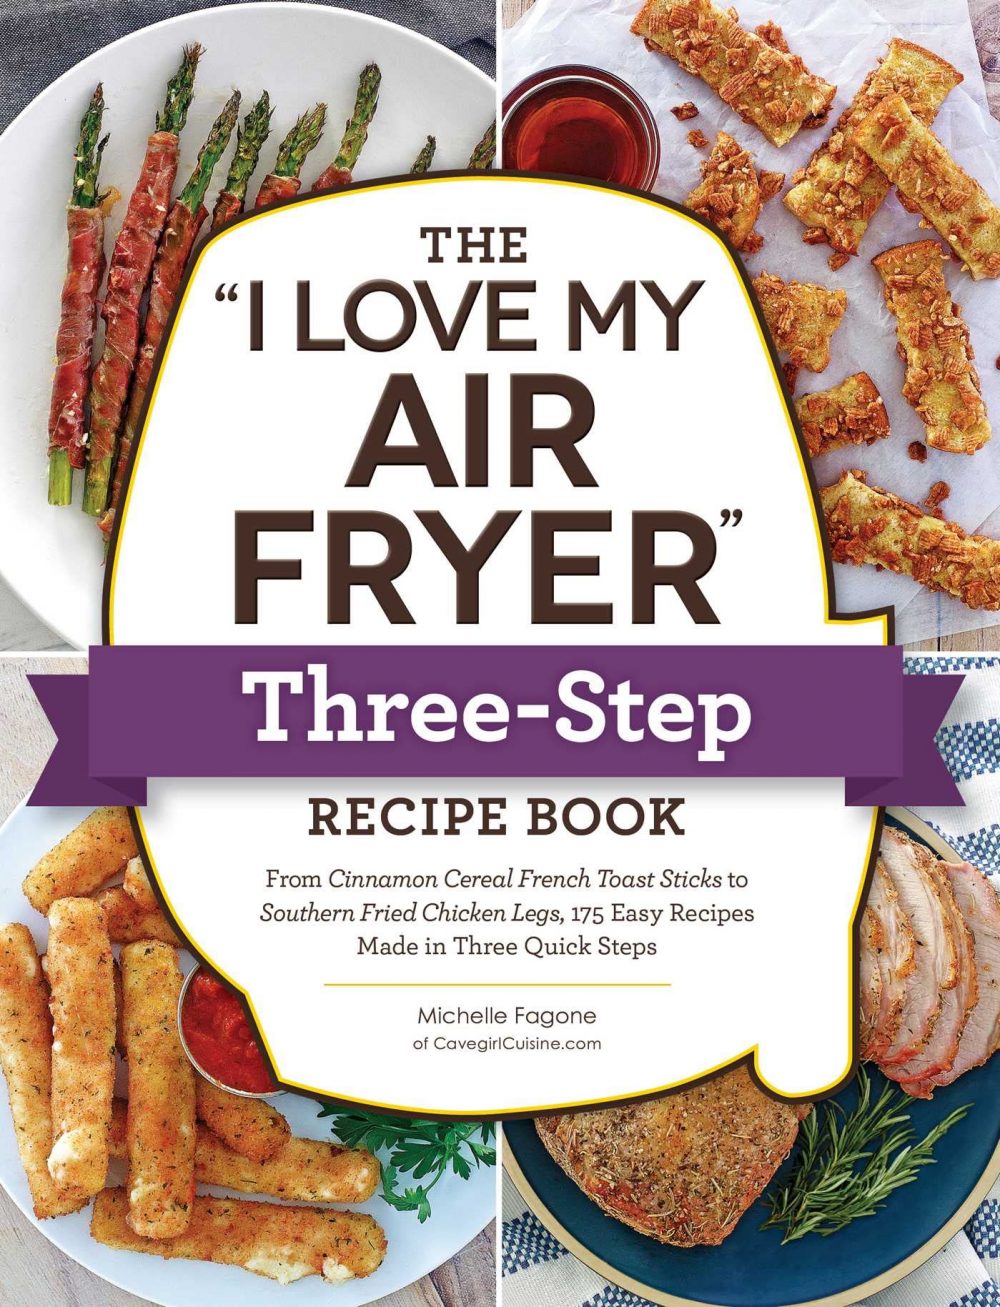 The The "I Love My Air Fryer" Three-Step Recipe Book